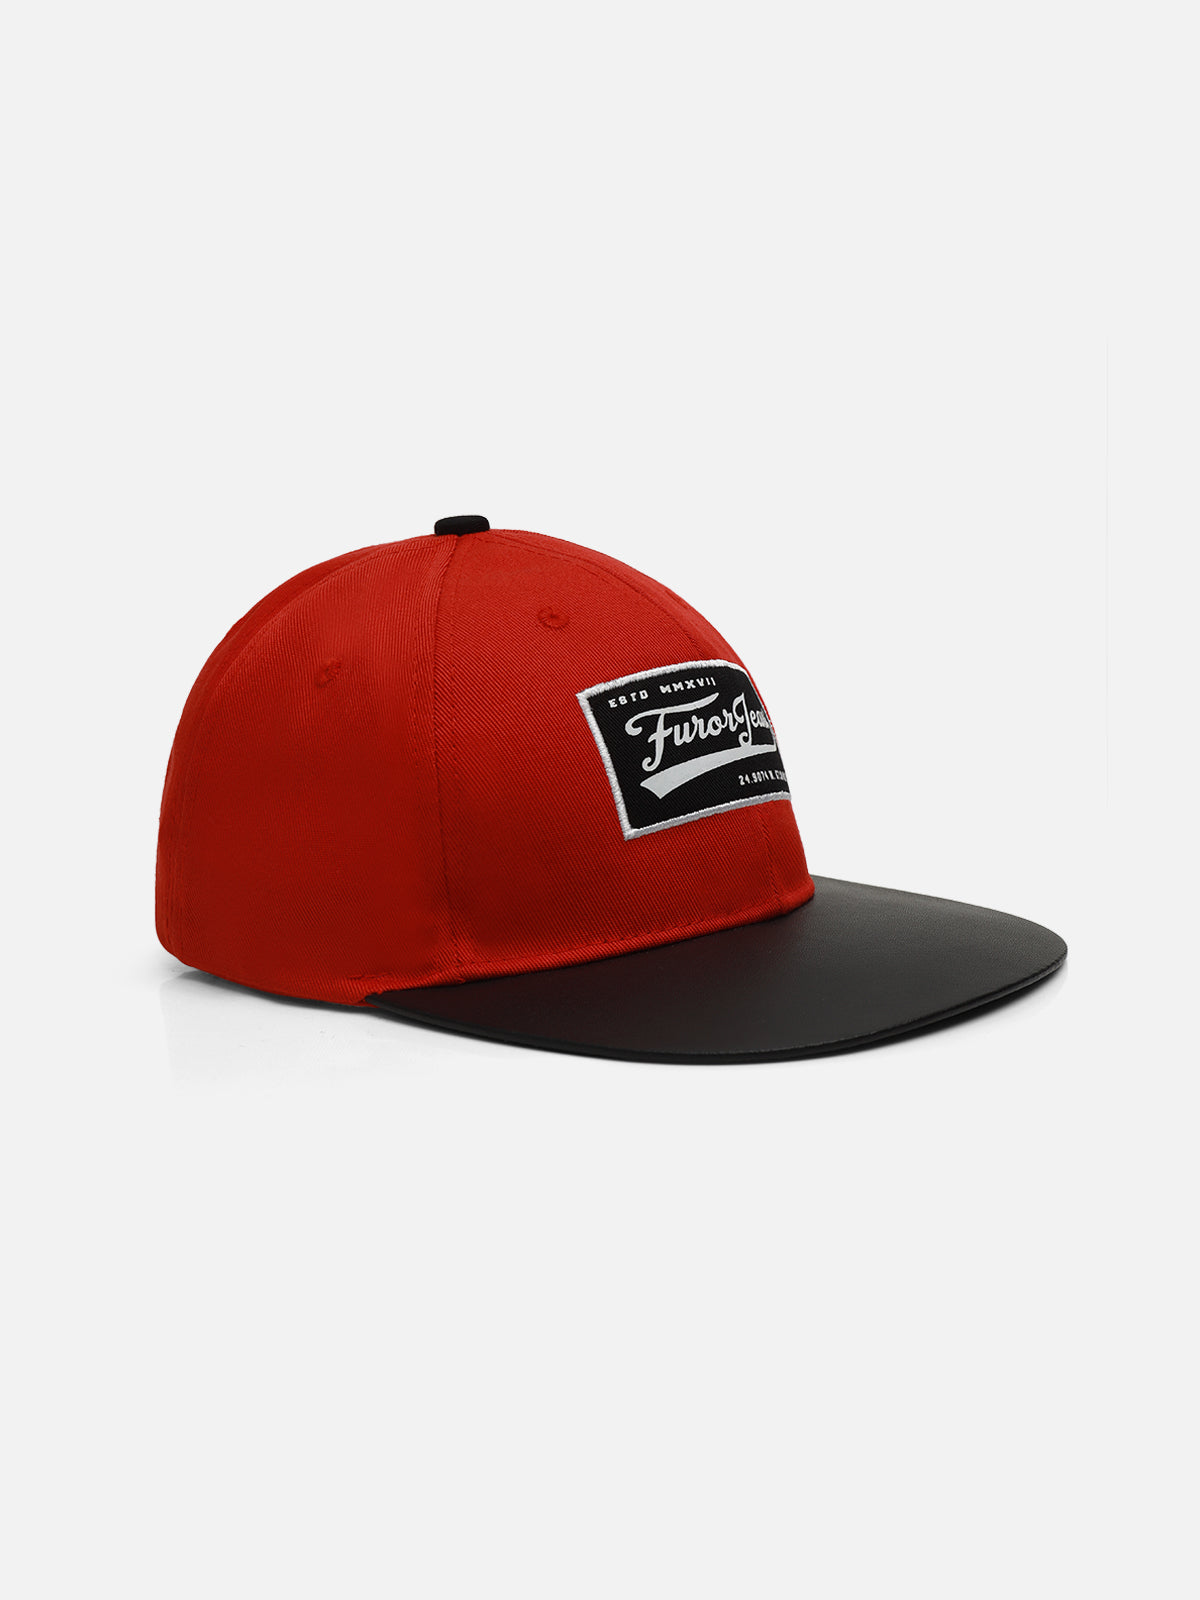 Red & Black Baseball Cap - FAC23-035